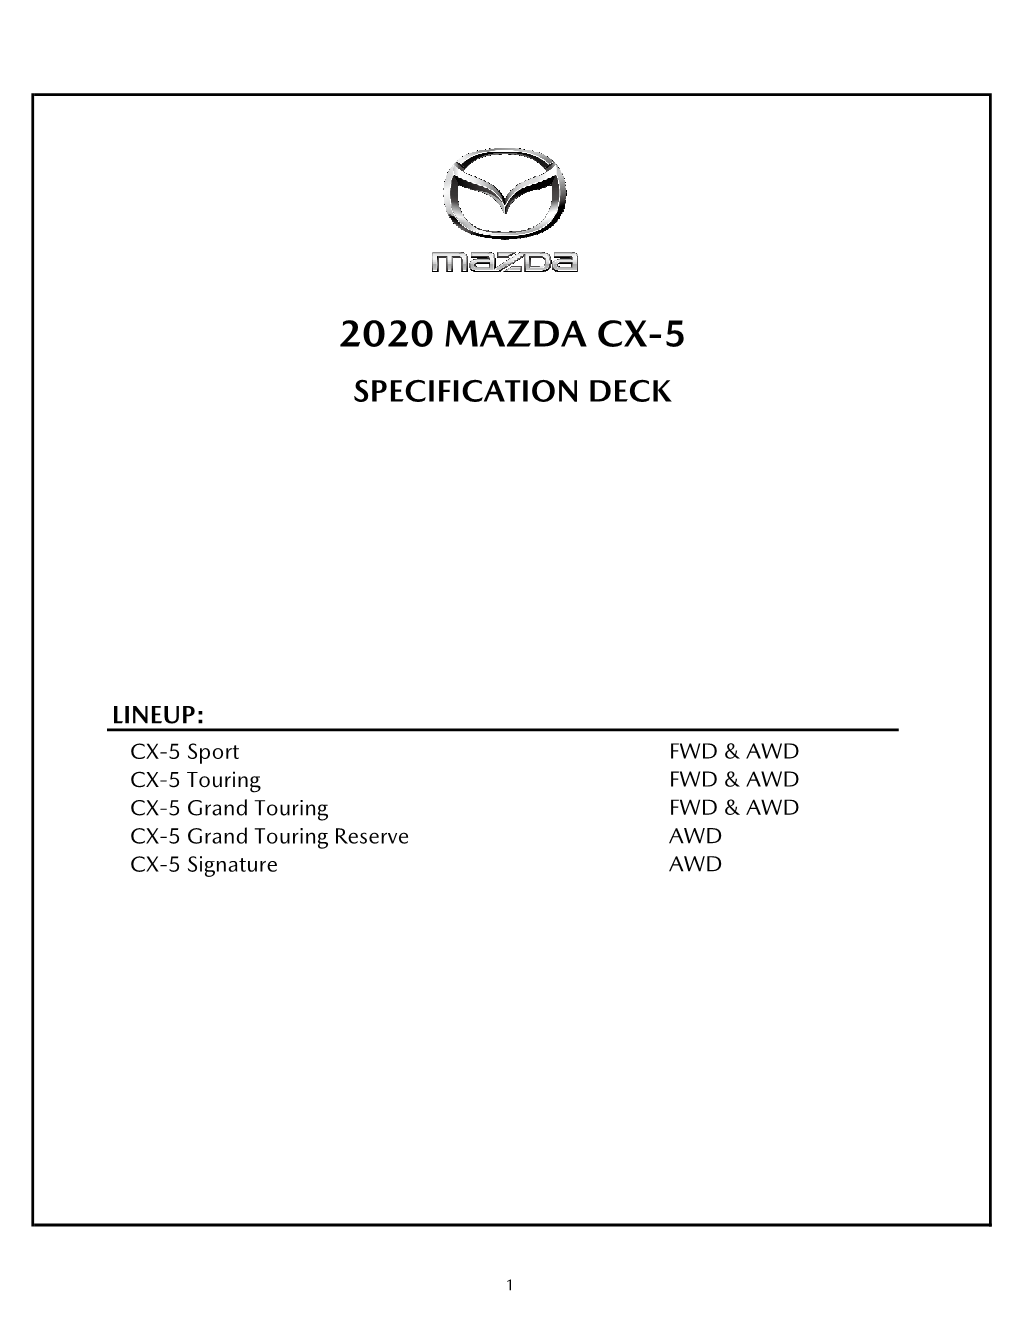 2020 Mazda Cx-5 Specification Deck